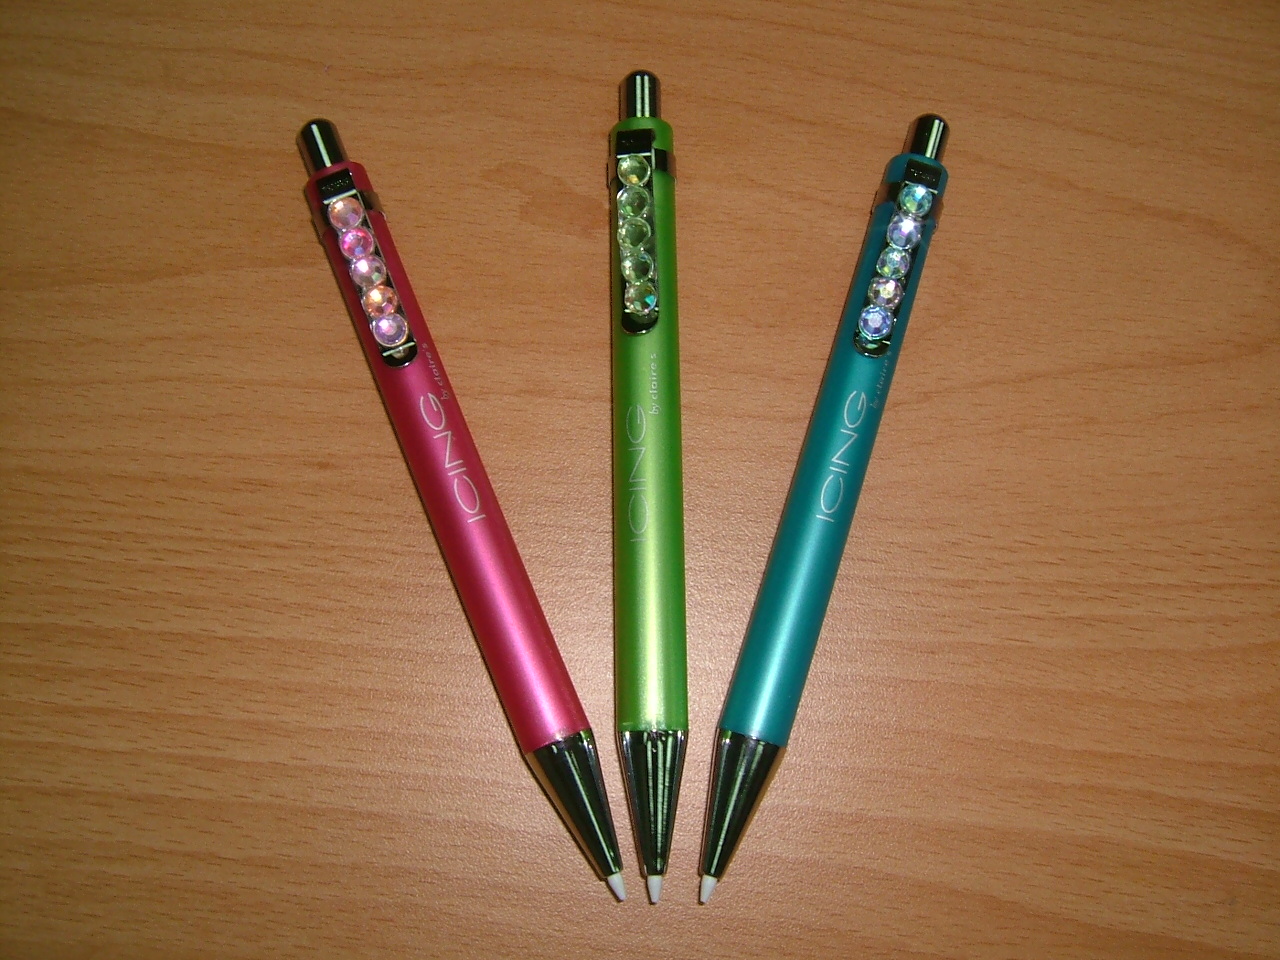 ball pen /gel pen /mechanical pencil (Stylo bille / Gel stylo / crayon mécanique)